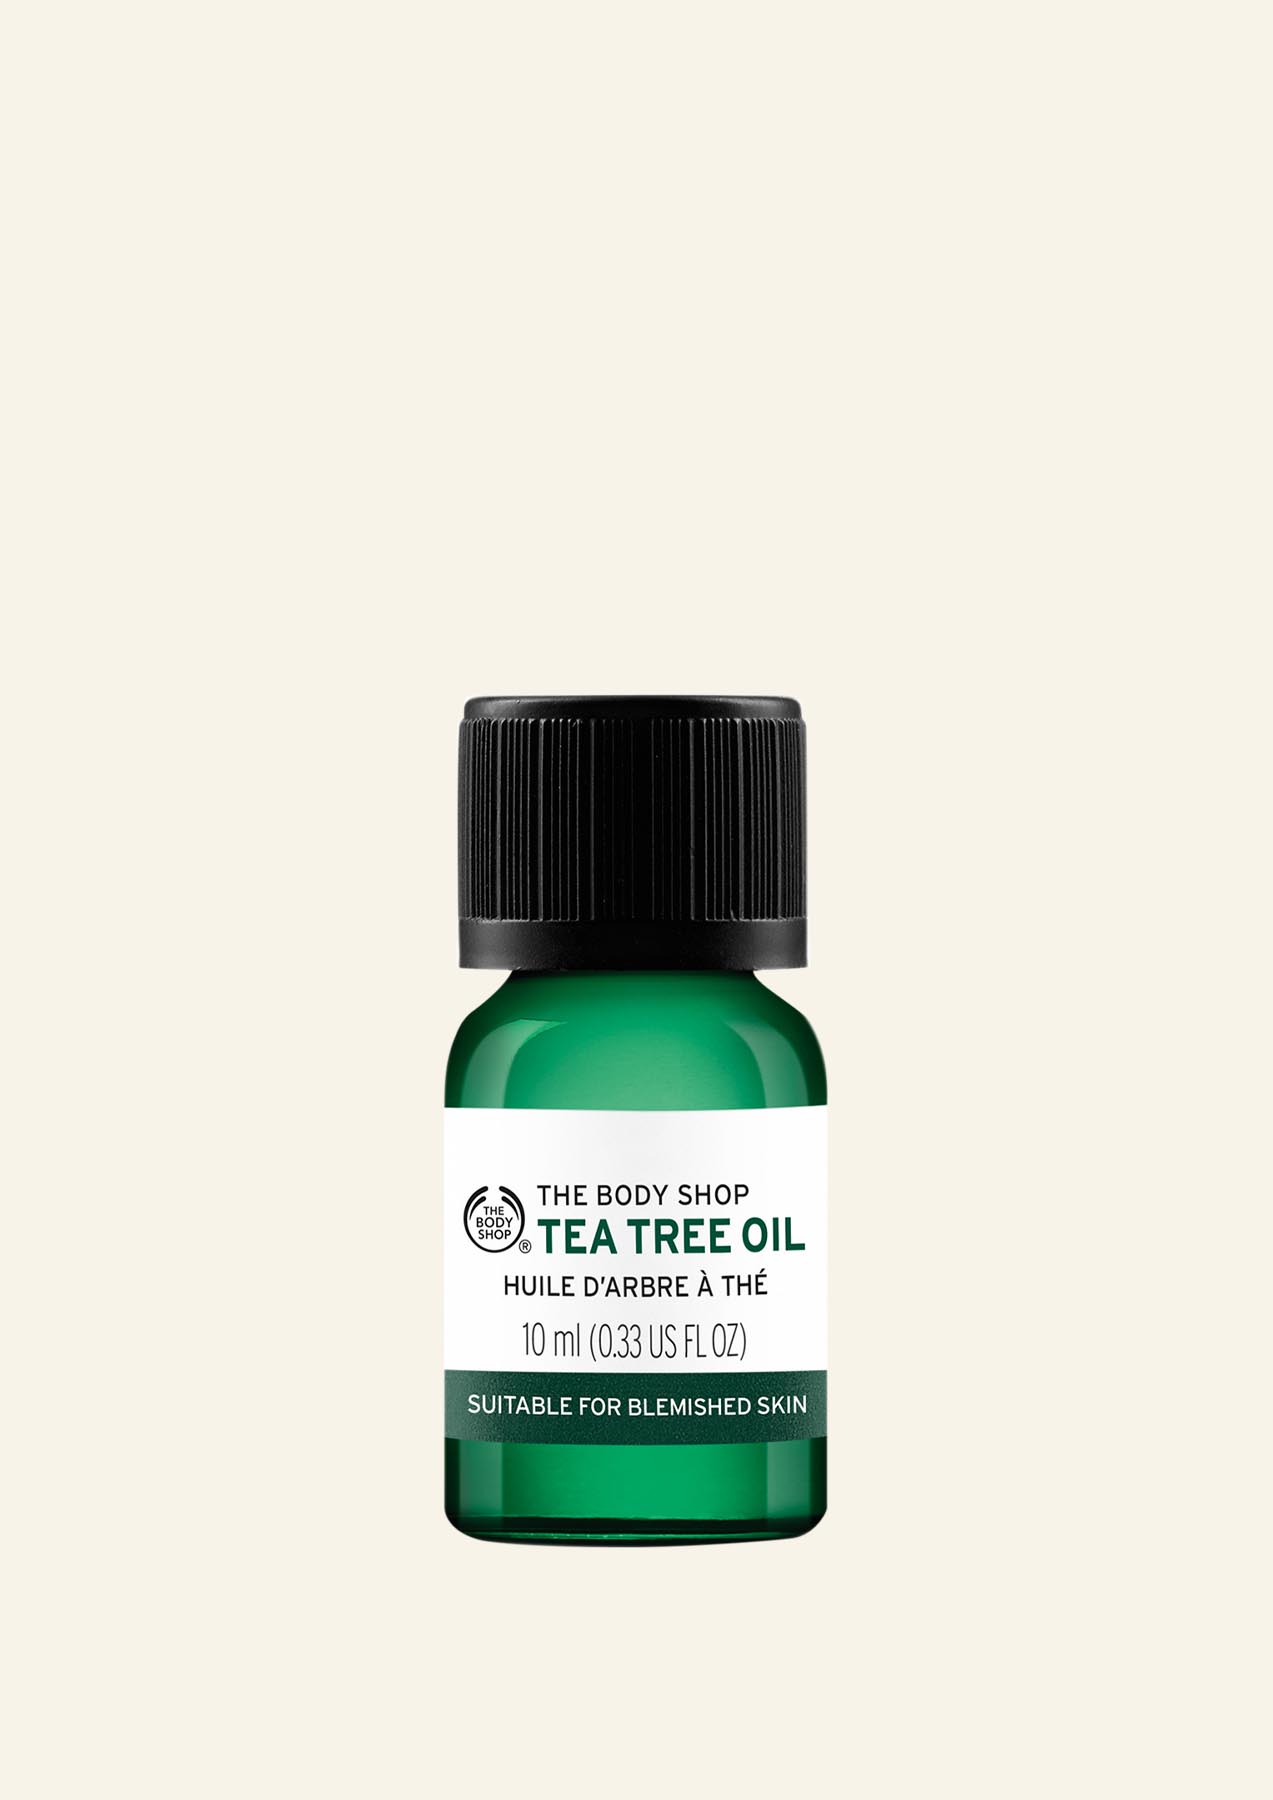 tea tree oil 10ml 1 inrsdps039 - Sada Al-Ummah blog